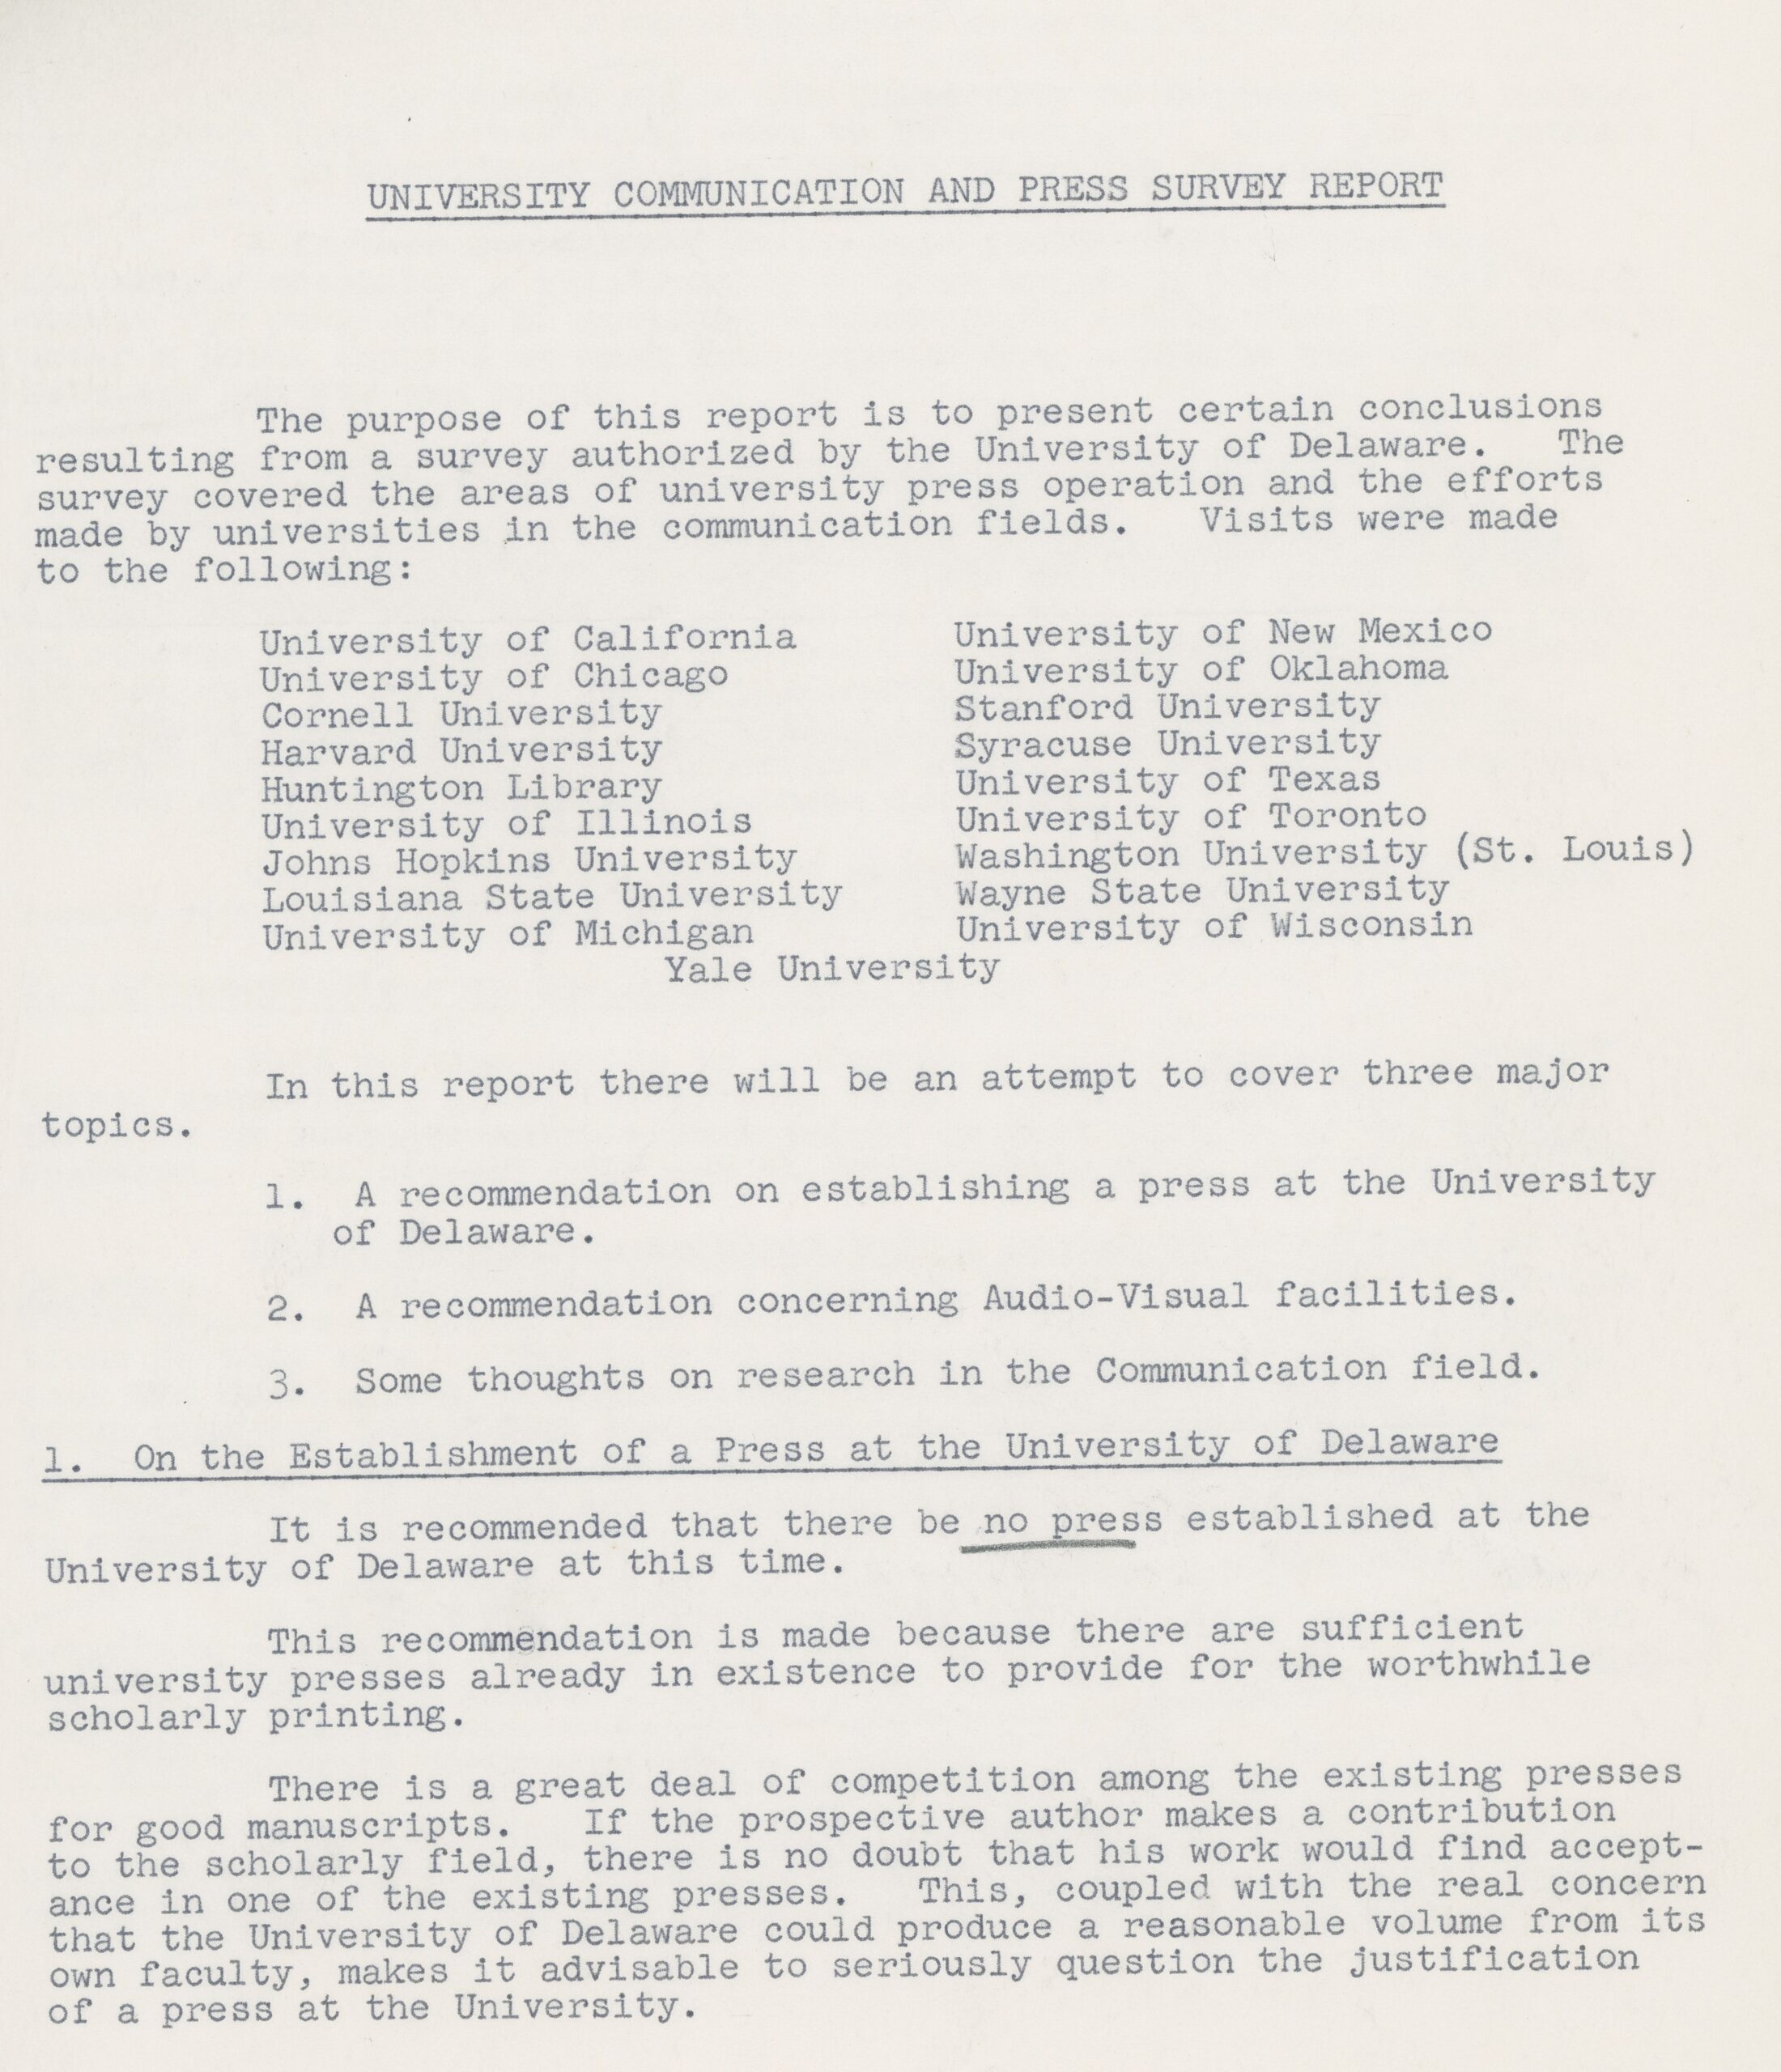 University Communication and Press Survey Report June 4, 1958